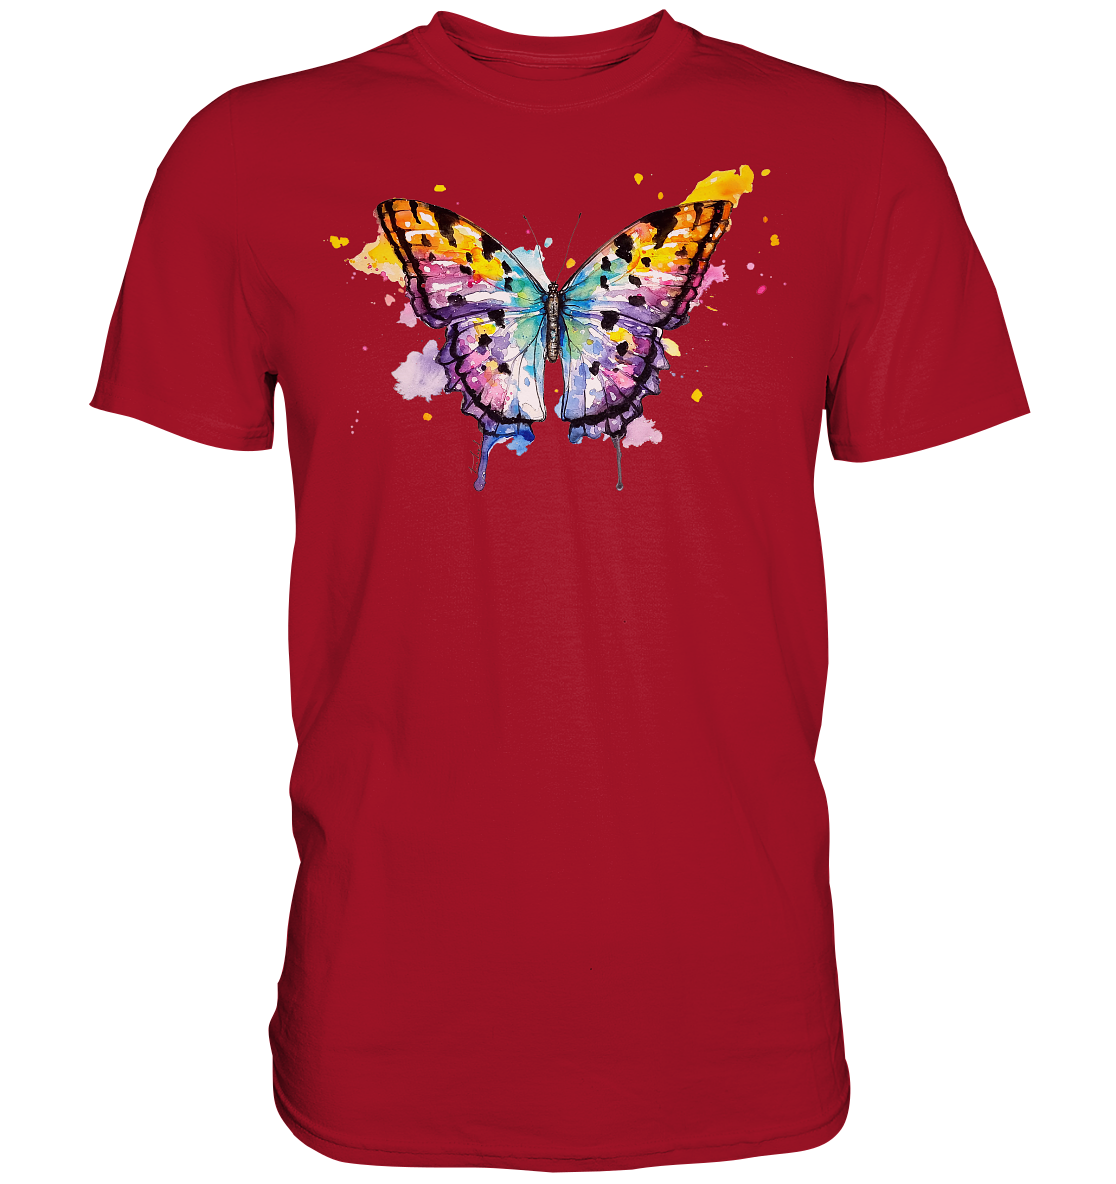 Bunter Schmetterling - Classic Shirt